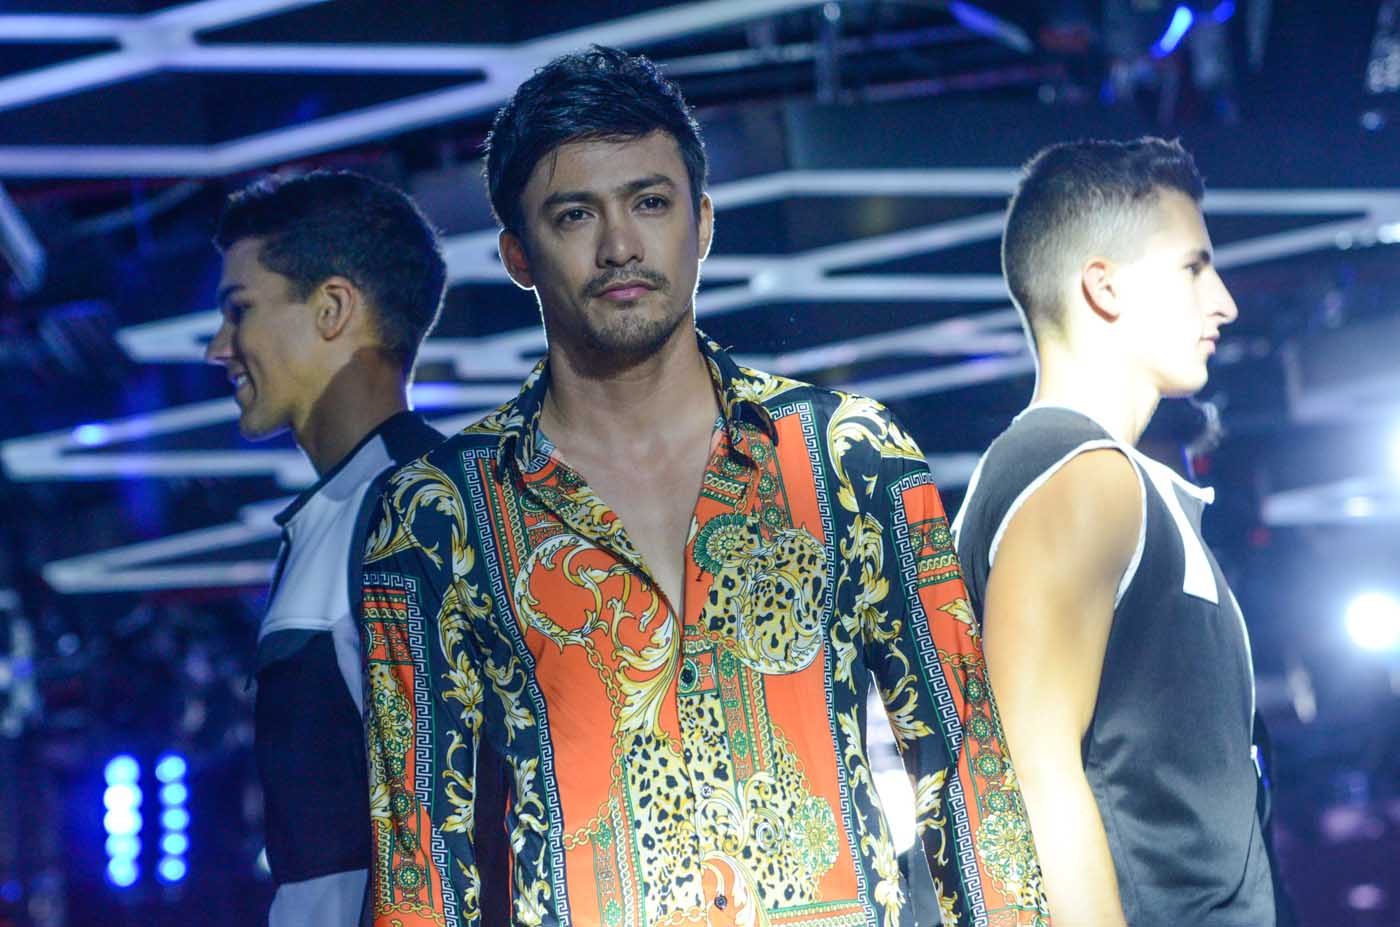 IN PHOTOS: Mister International 2015 candidates wear PH designs in fashion show